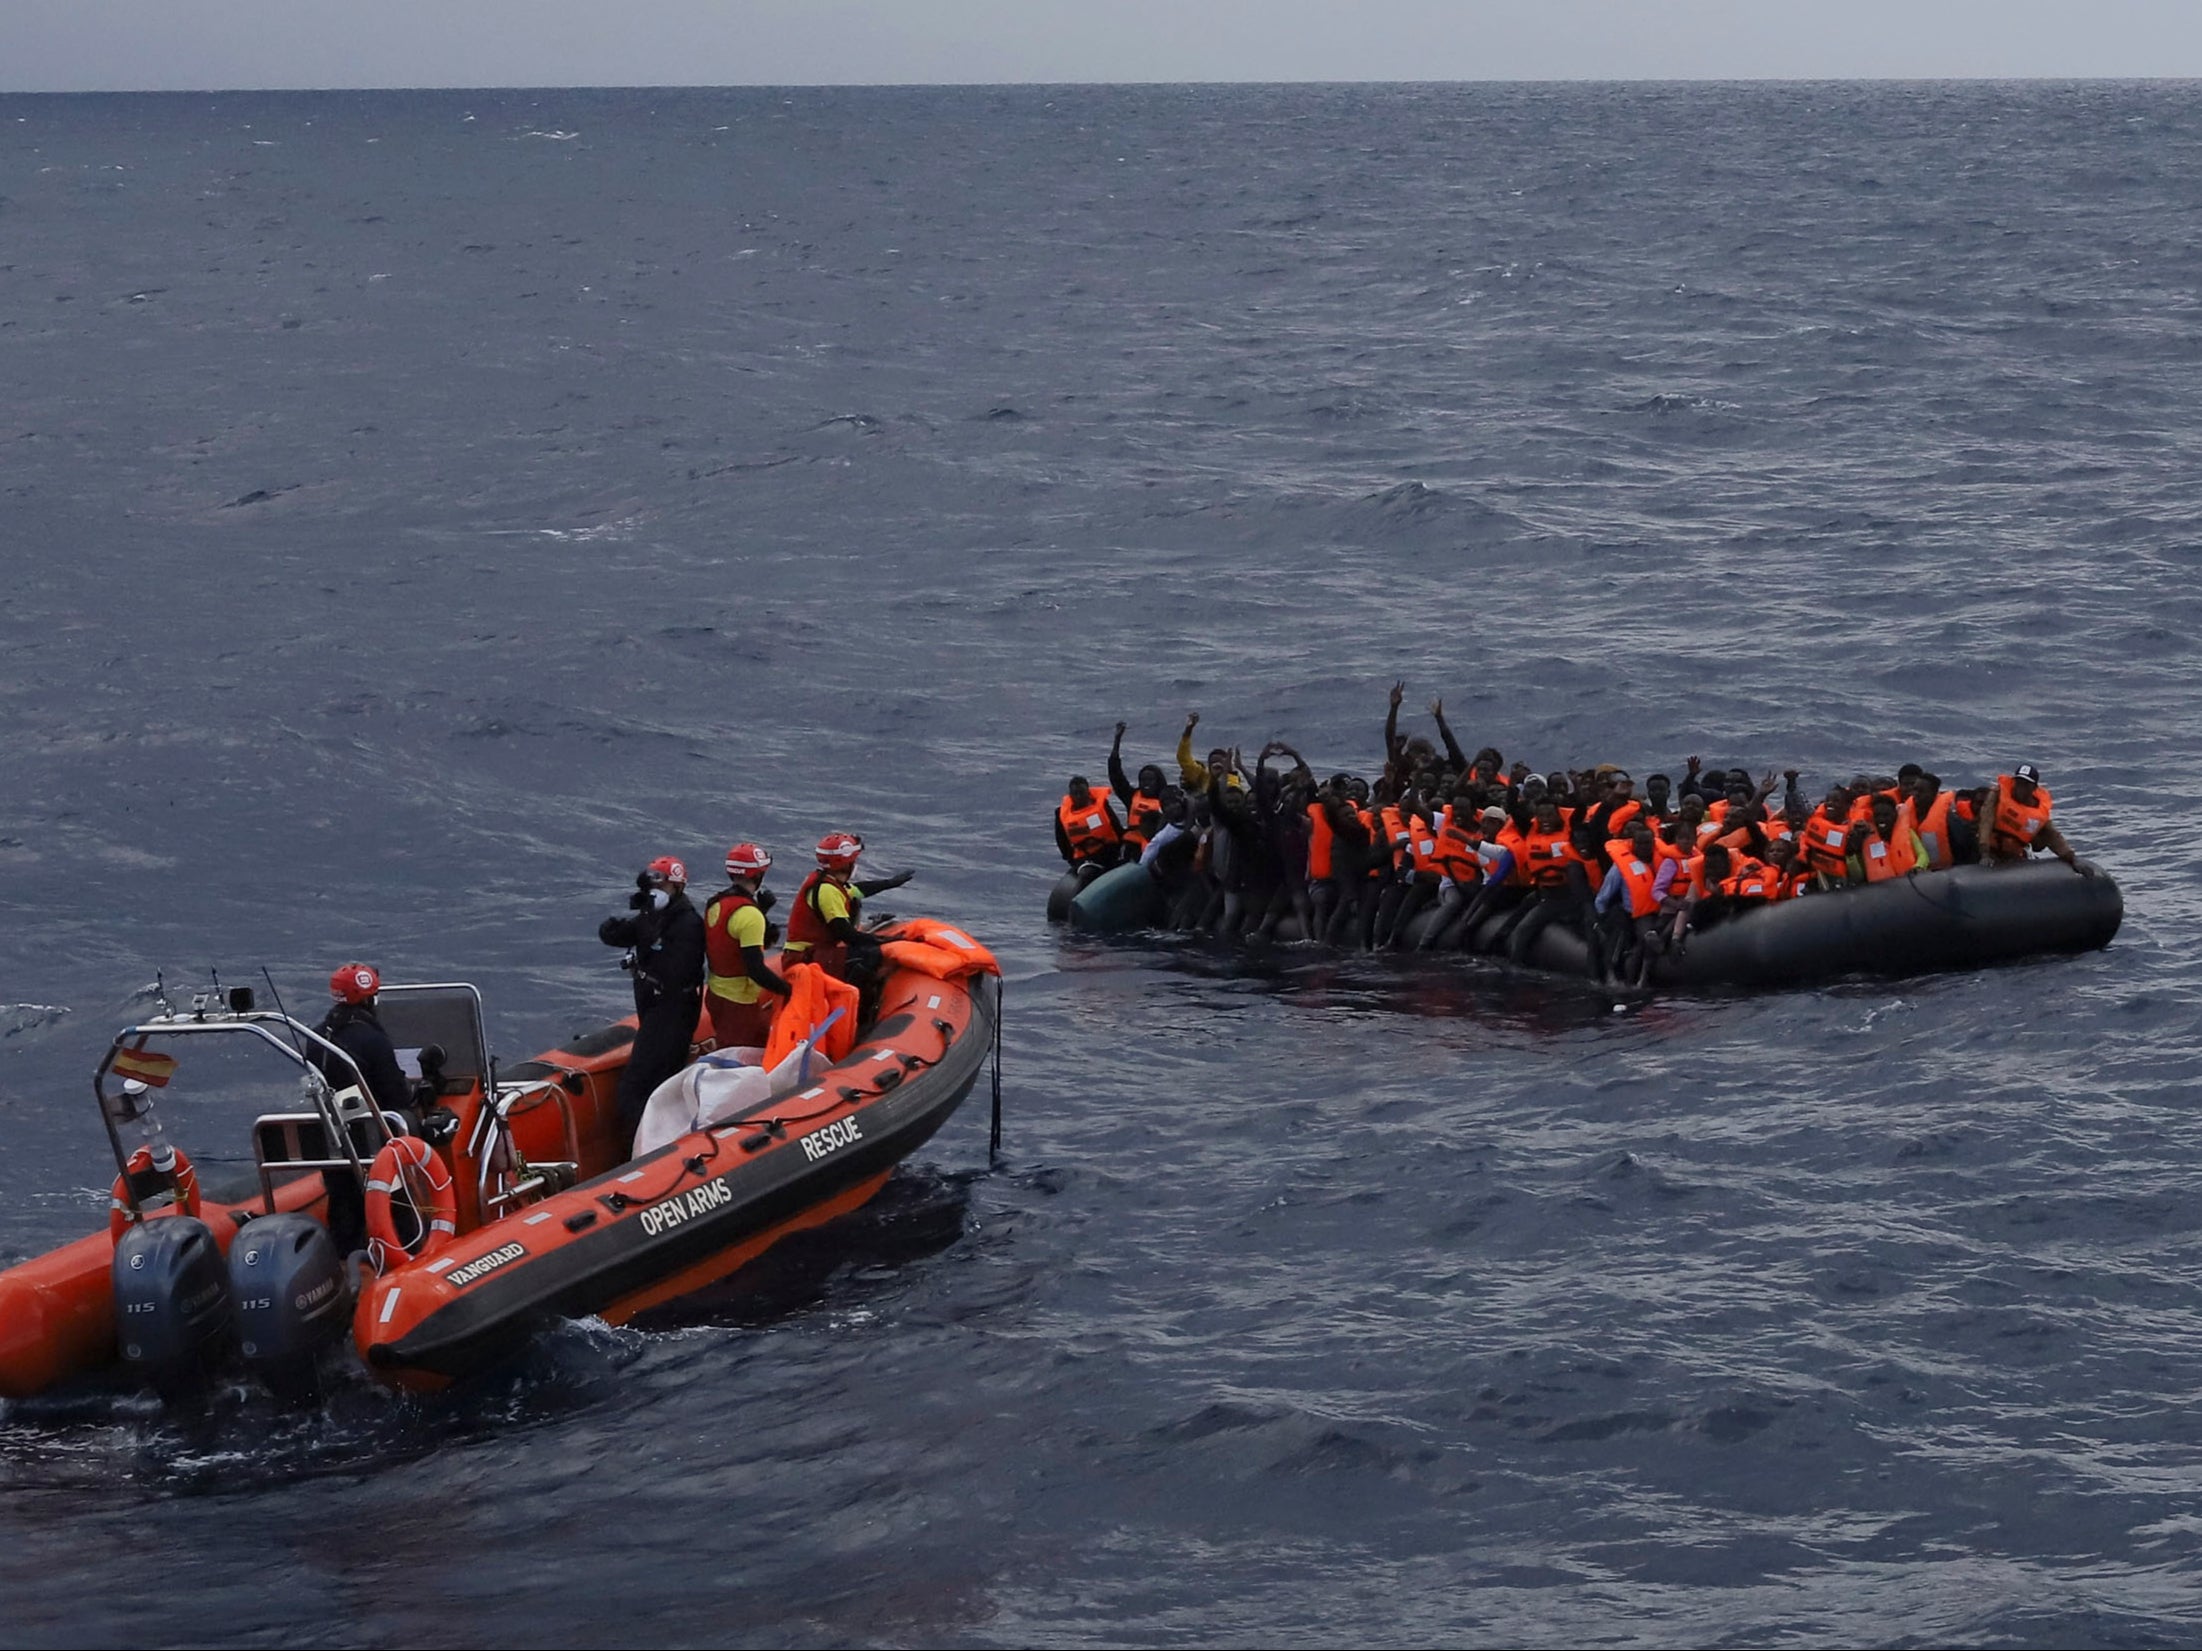 Refugiados y migrantes esperan ser rescatados por miembros de la ONG española Proactiva Open Arms, tras salir de Libia intentando llegar a suelo europeo a bordo de un bote de goma